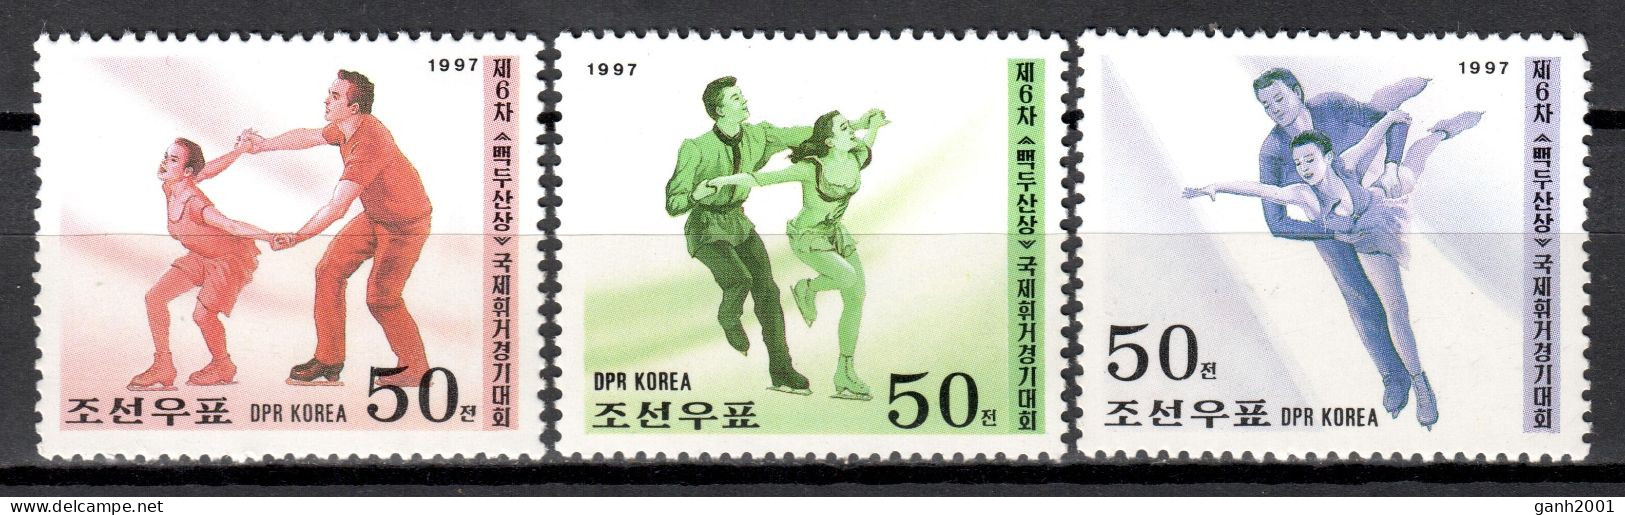 Korea North 1997 Corea / Figure Skating MNH Patinaje Artístico / Lx34  34-2 - Kunstschaatsen